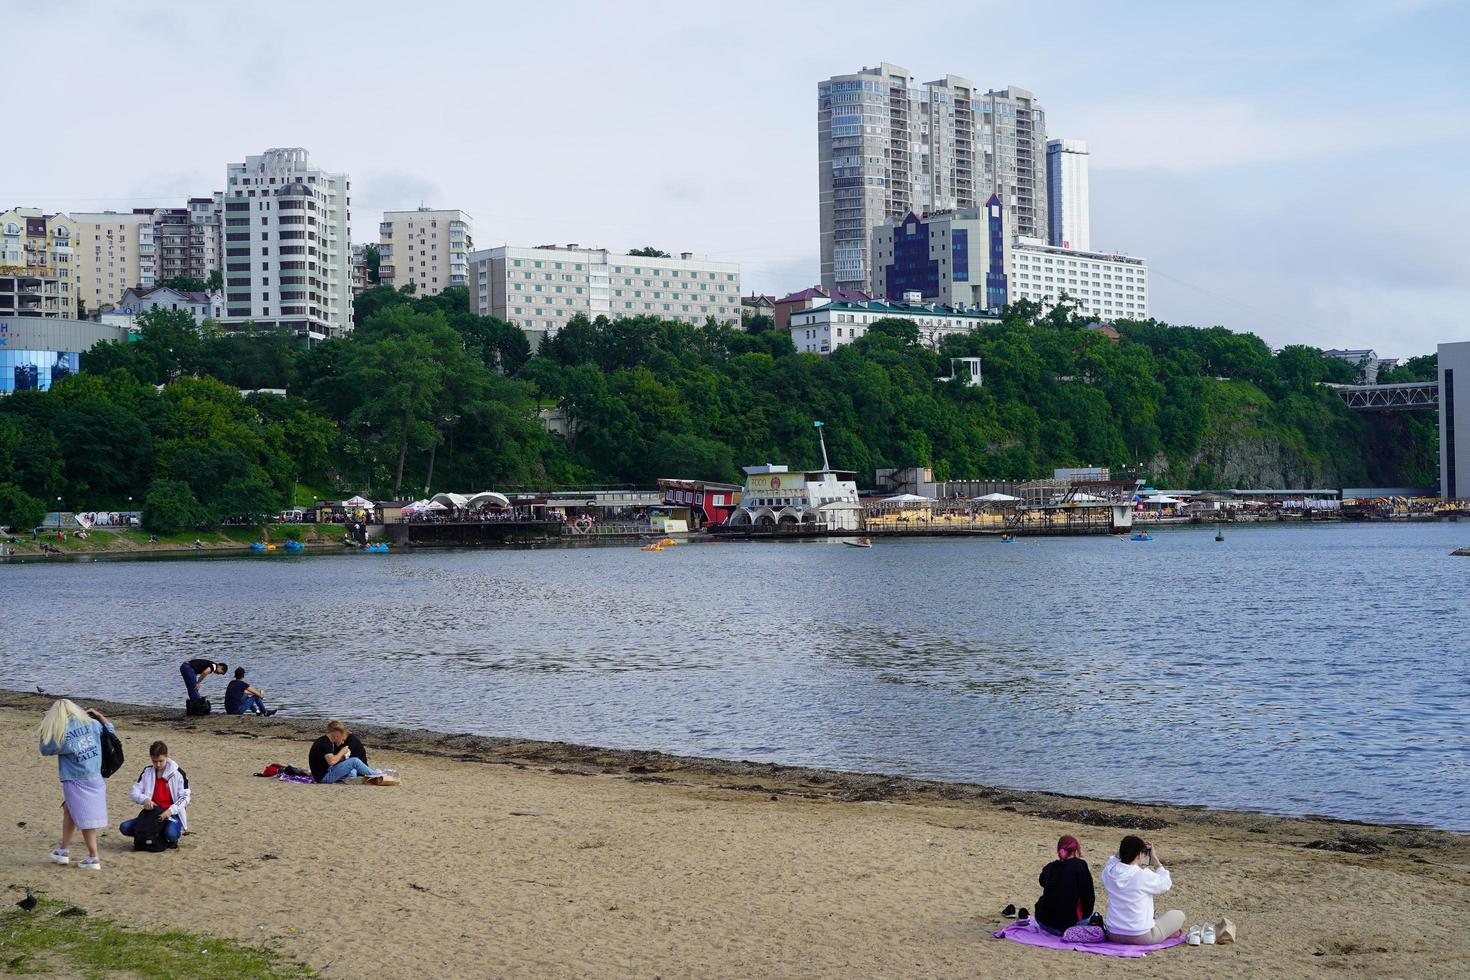 vladivostok, rusia-6 de julio de 2020 paisaje urbano con vistas a la playa de arena. foto